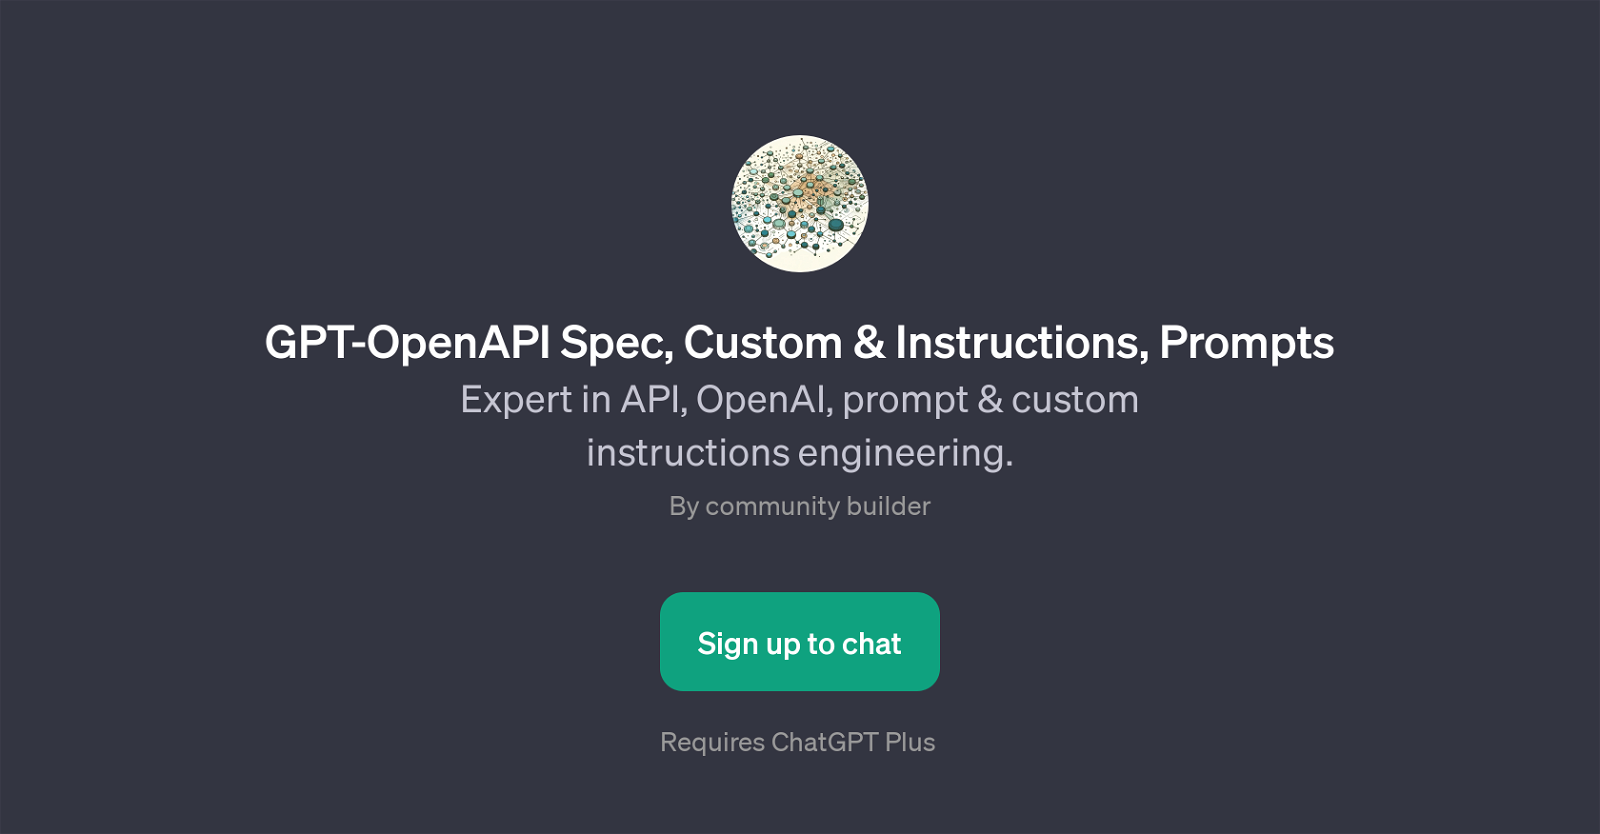 GPT-OpenAPI Spec, Custom & Instructions, Prompts website